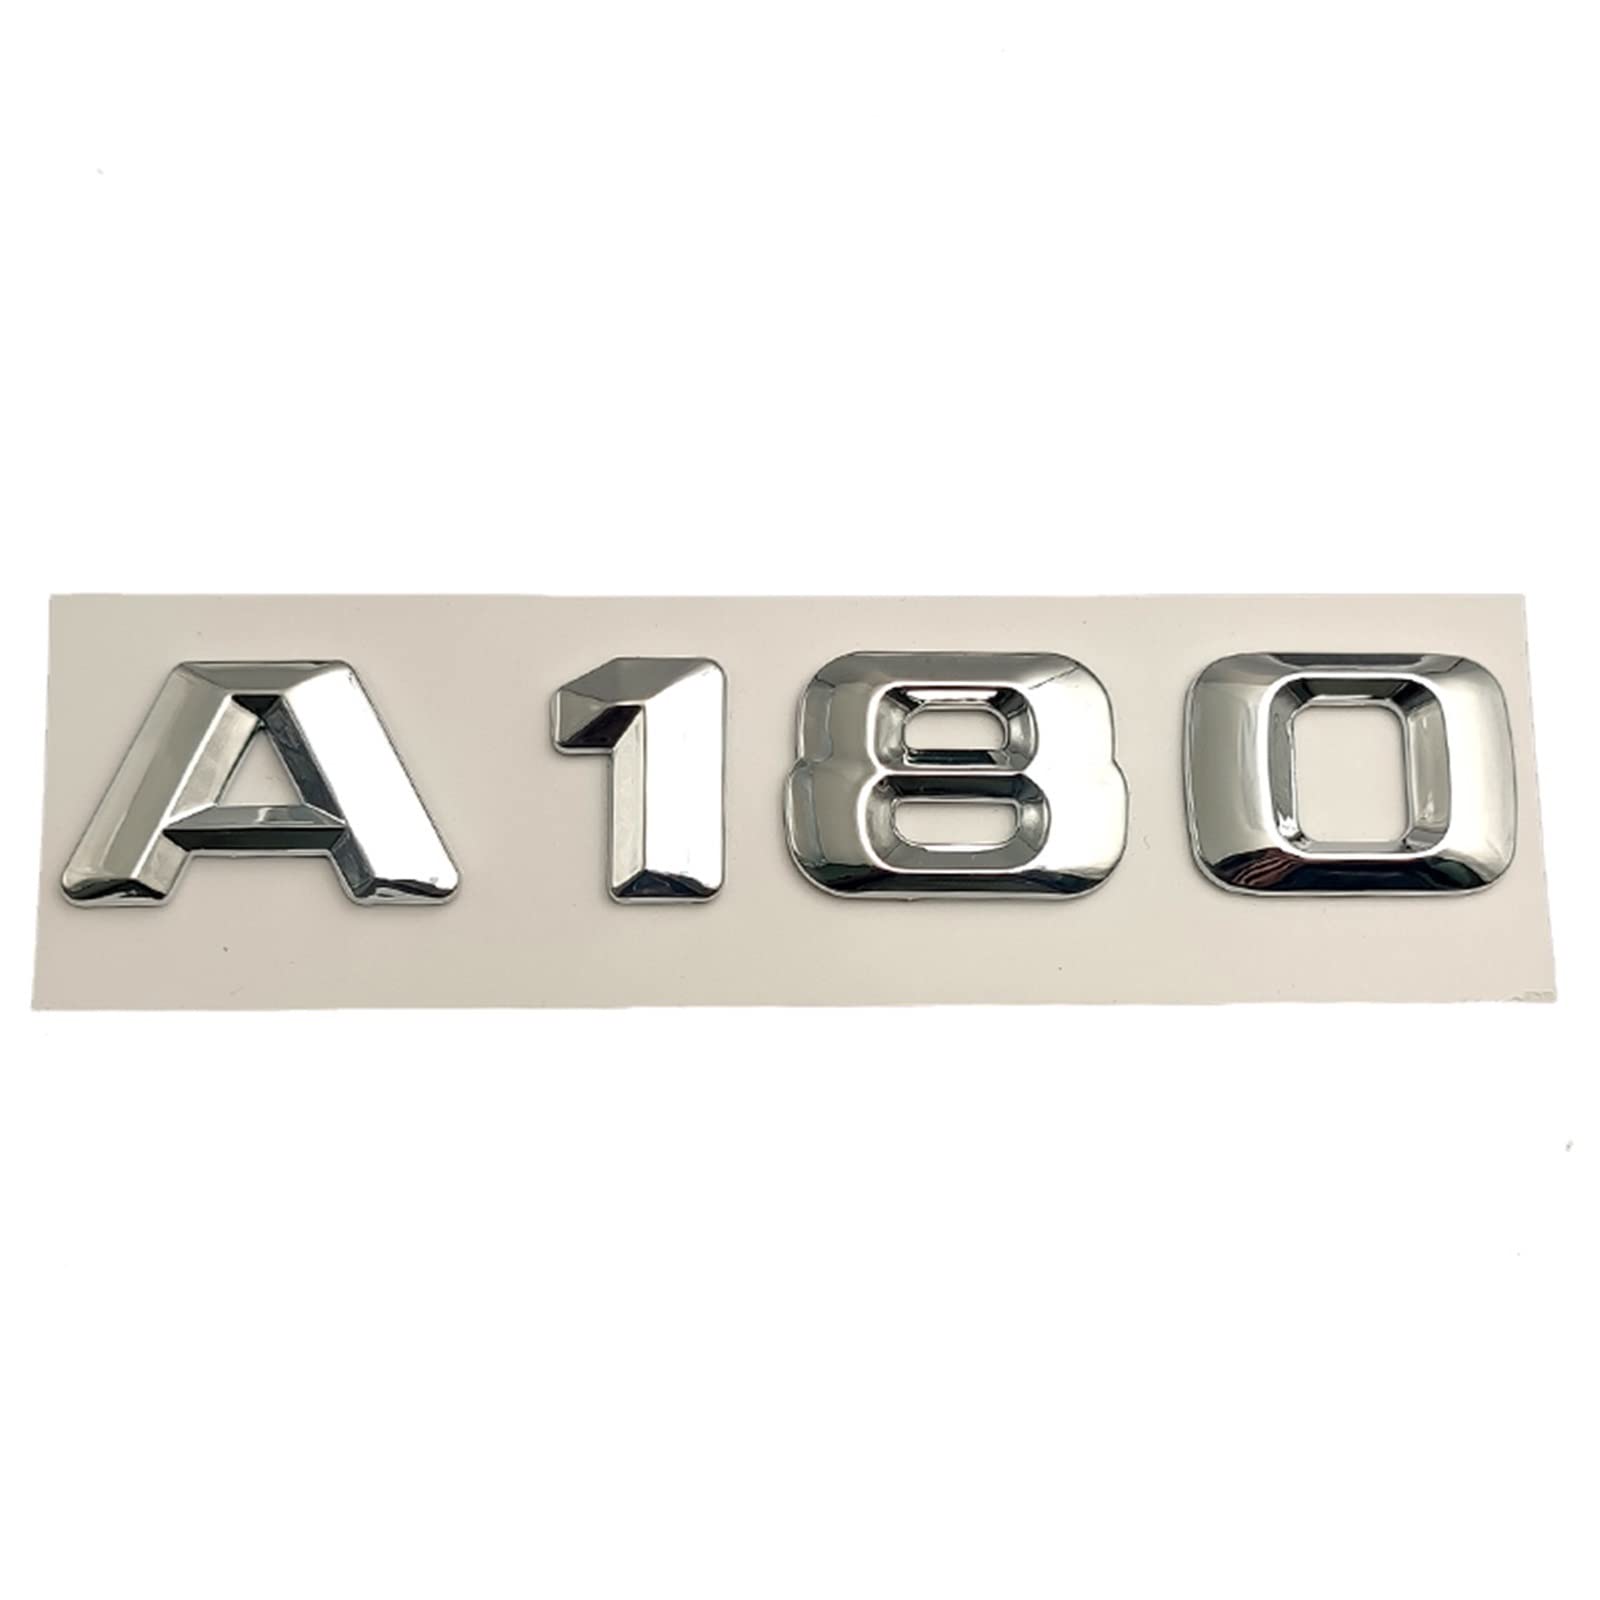 LAZIRO 2014-2016 3D ABS Chrom Buchstaben Auto Kofferraum Emblem Abzeichen A45 A160 A180 A200 Logo Passend for Mercedes Benz W176 W177 Autozubehör (Color : A180) von LAZIRO